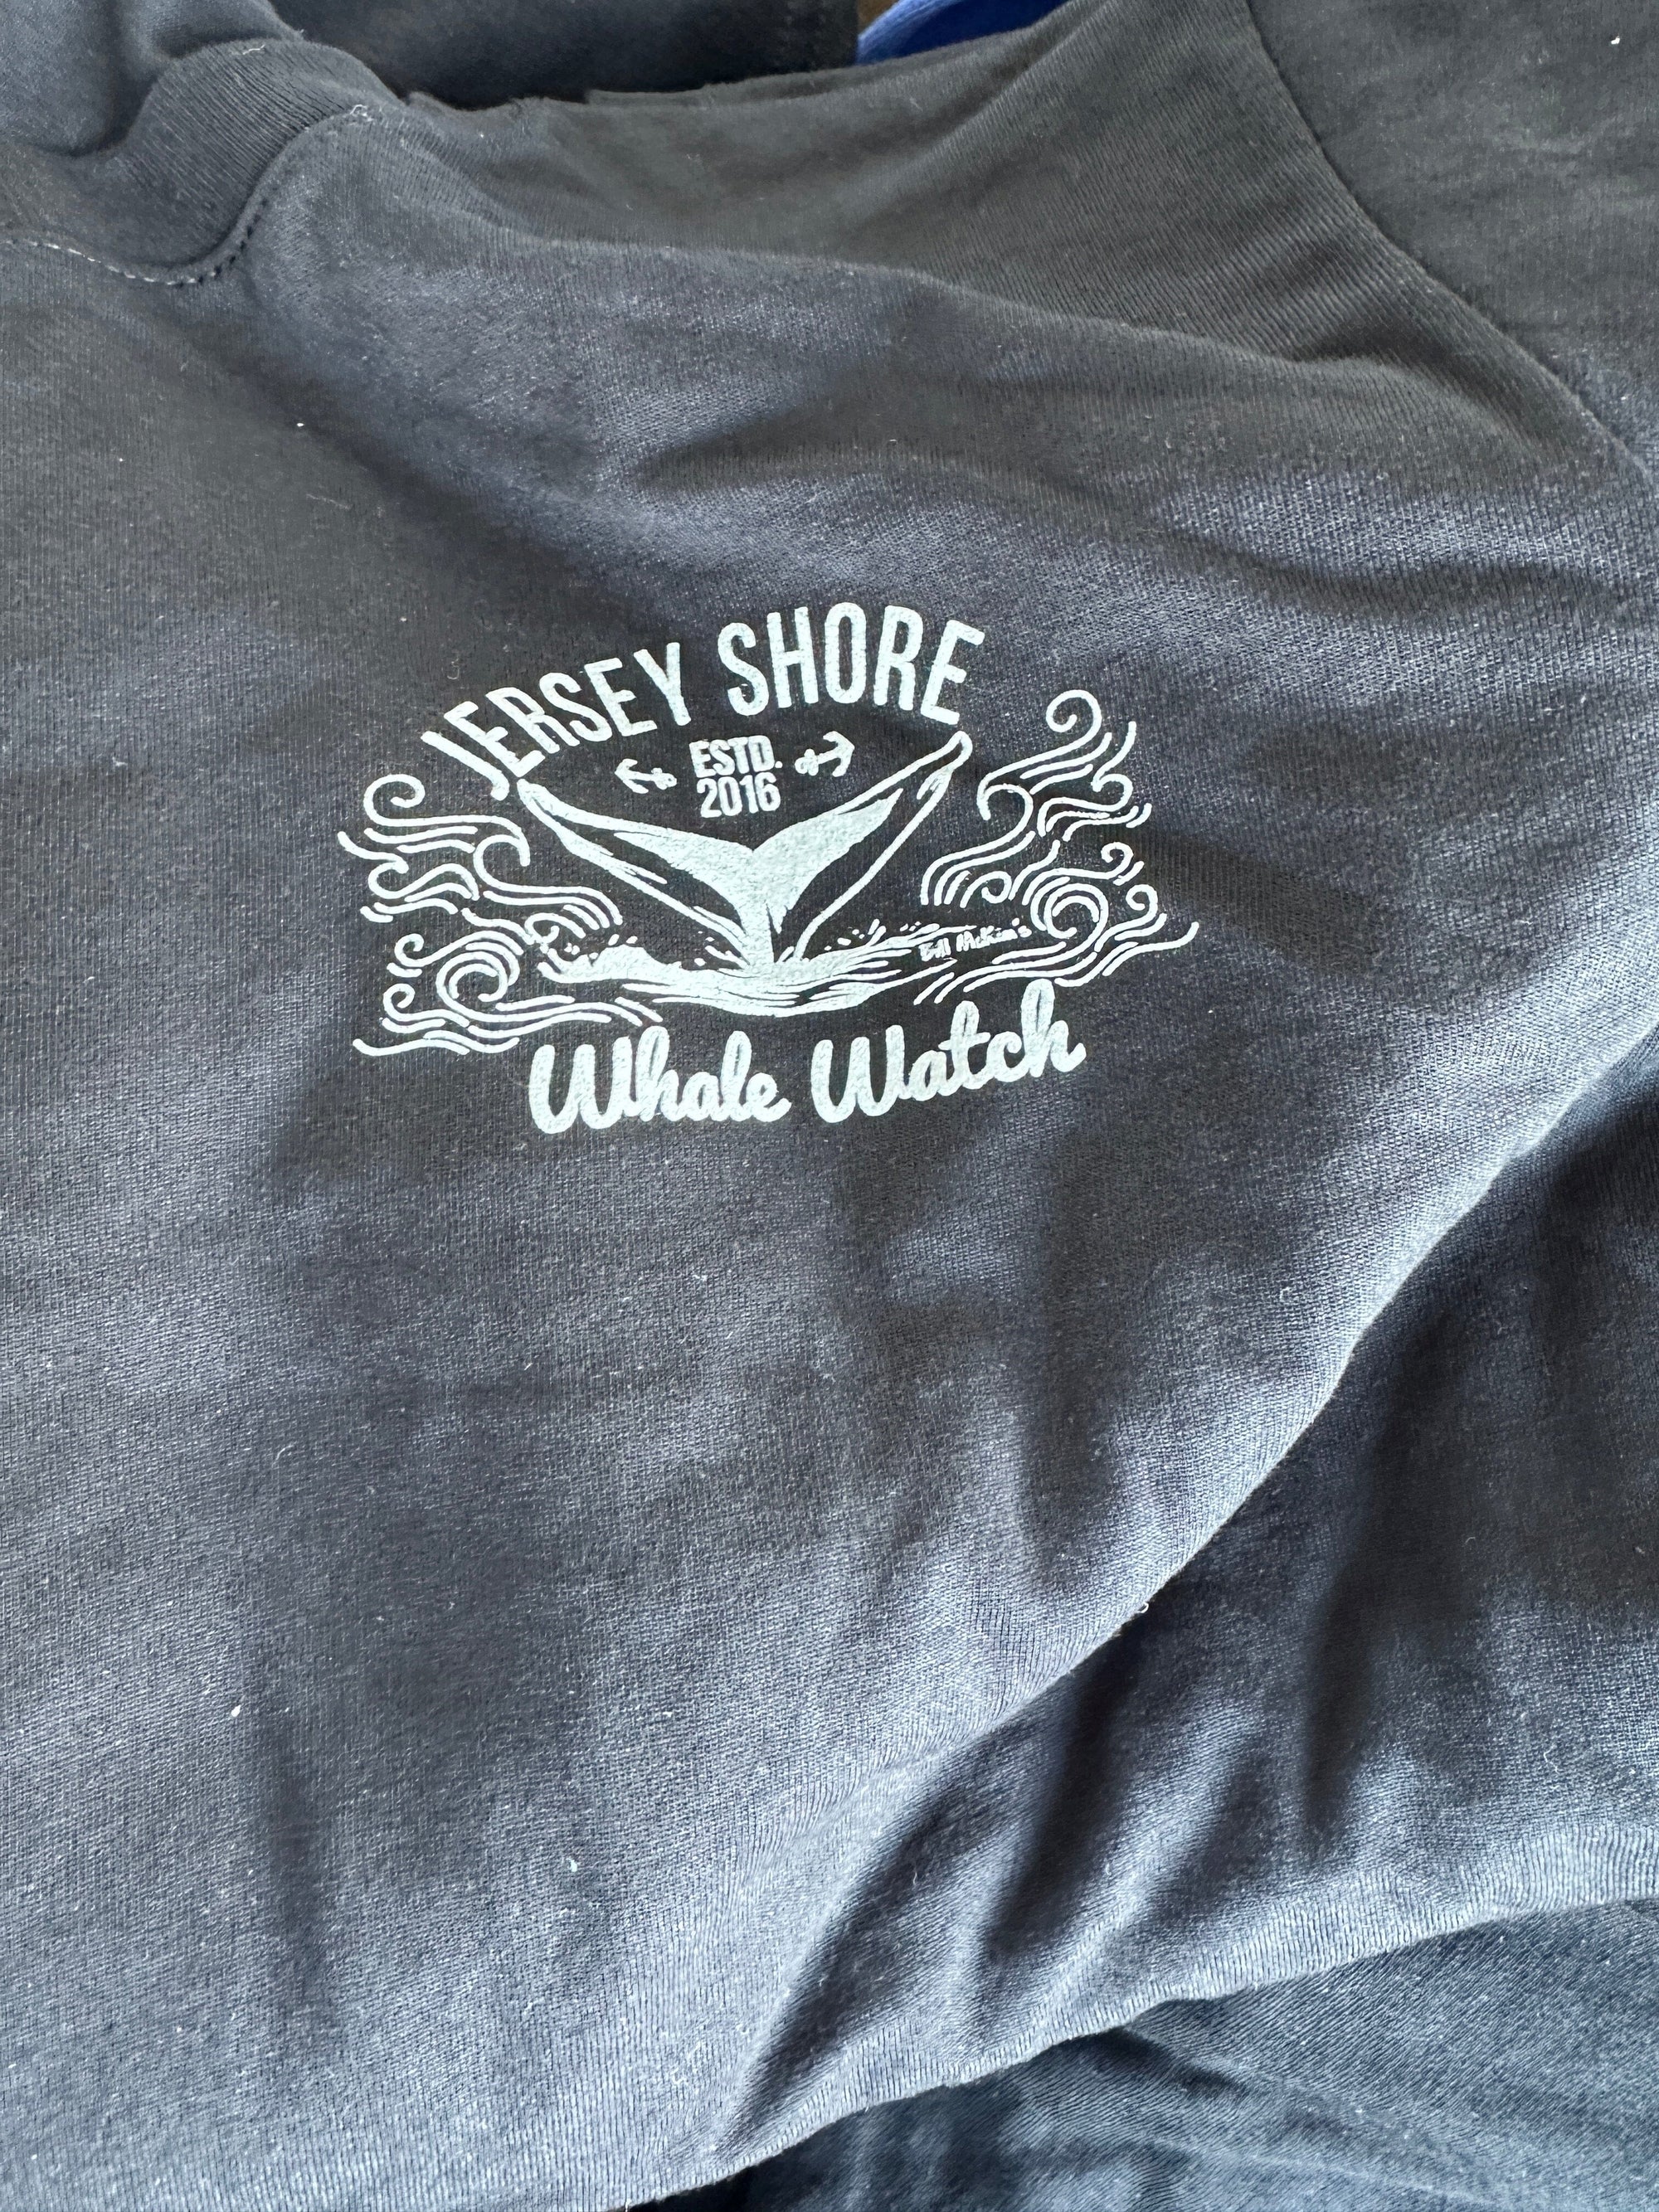 Est. 2016 Design Jersey Shore Whale Watch Sweatshirt printed both sides Bill McKim Photography 